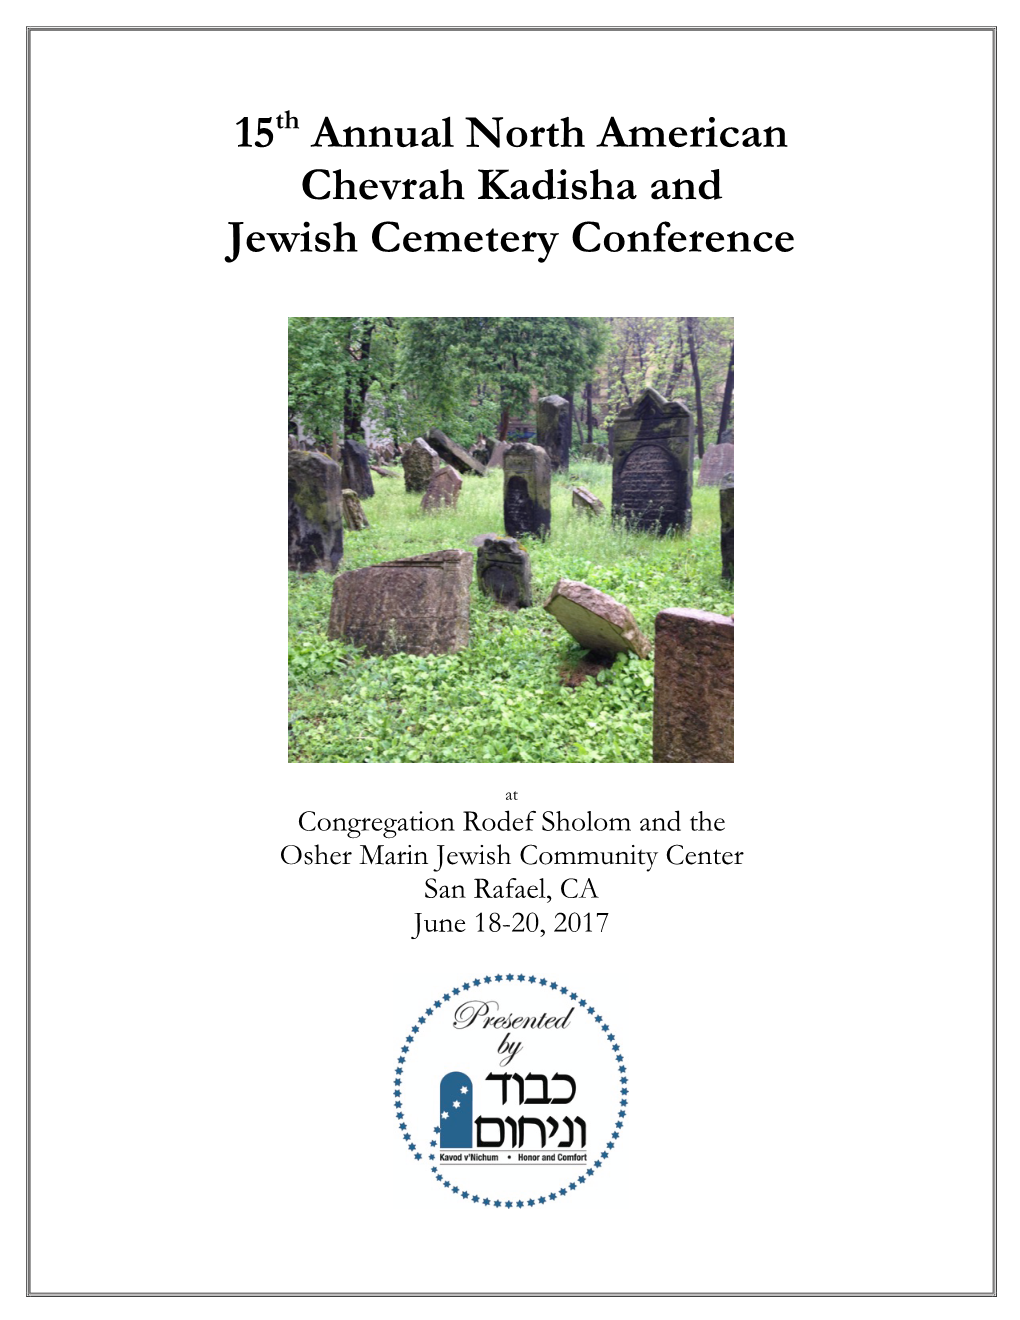 15Th Annual North American Chevrah Kadisha and Jewish Cemetery Conference